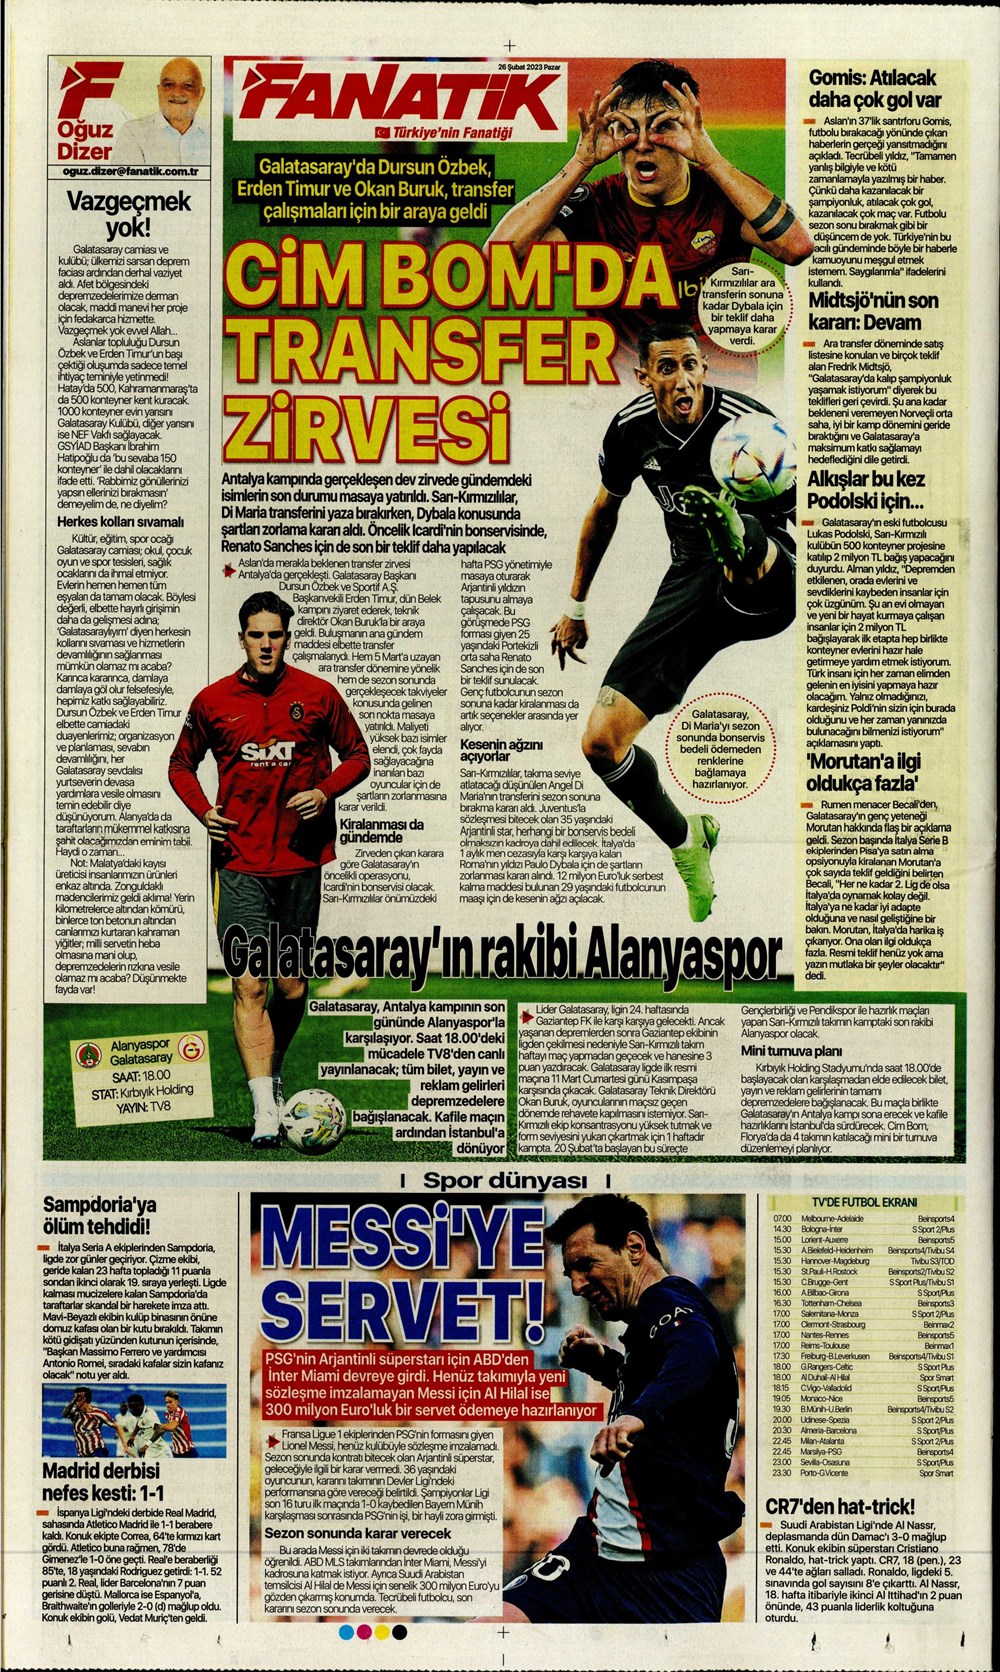 "Valenci'ağa' böyle istedi" - Sporun manşetleri  - 8. Foto